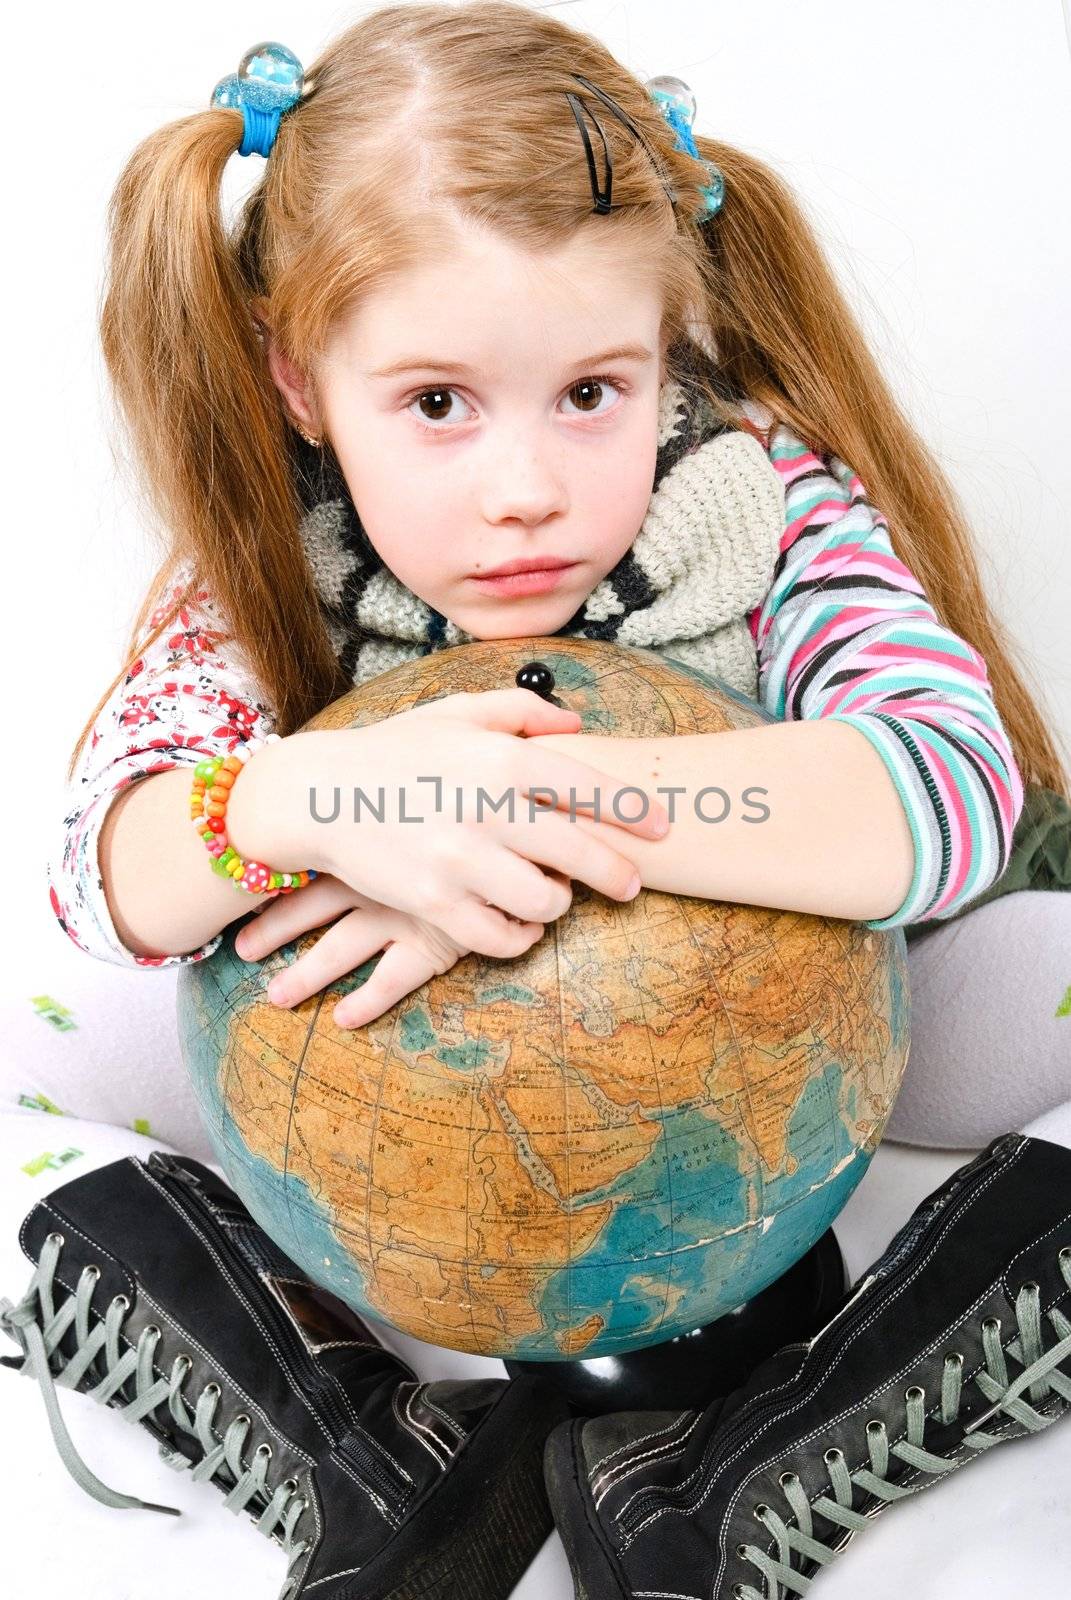 studio shot of pretty little girl holdibg an old globe